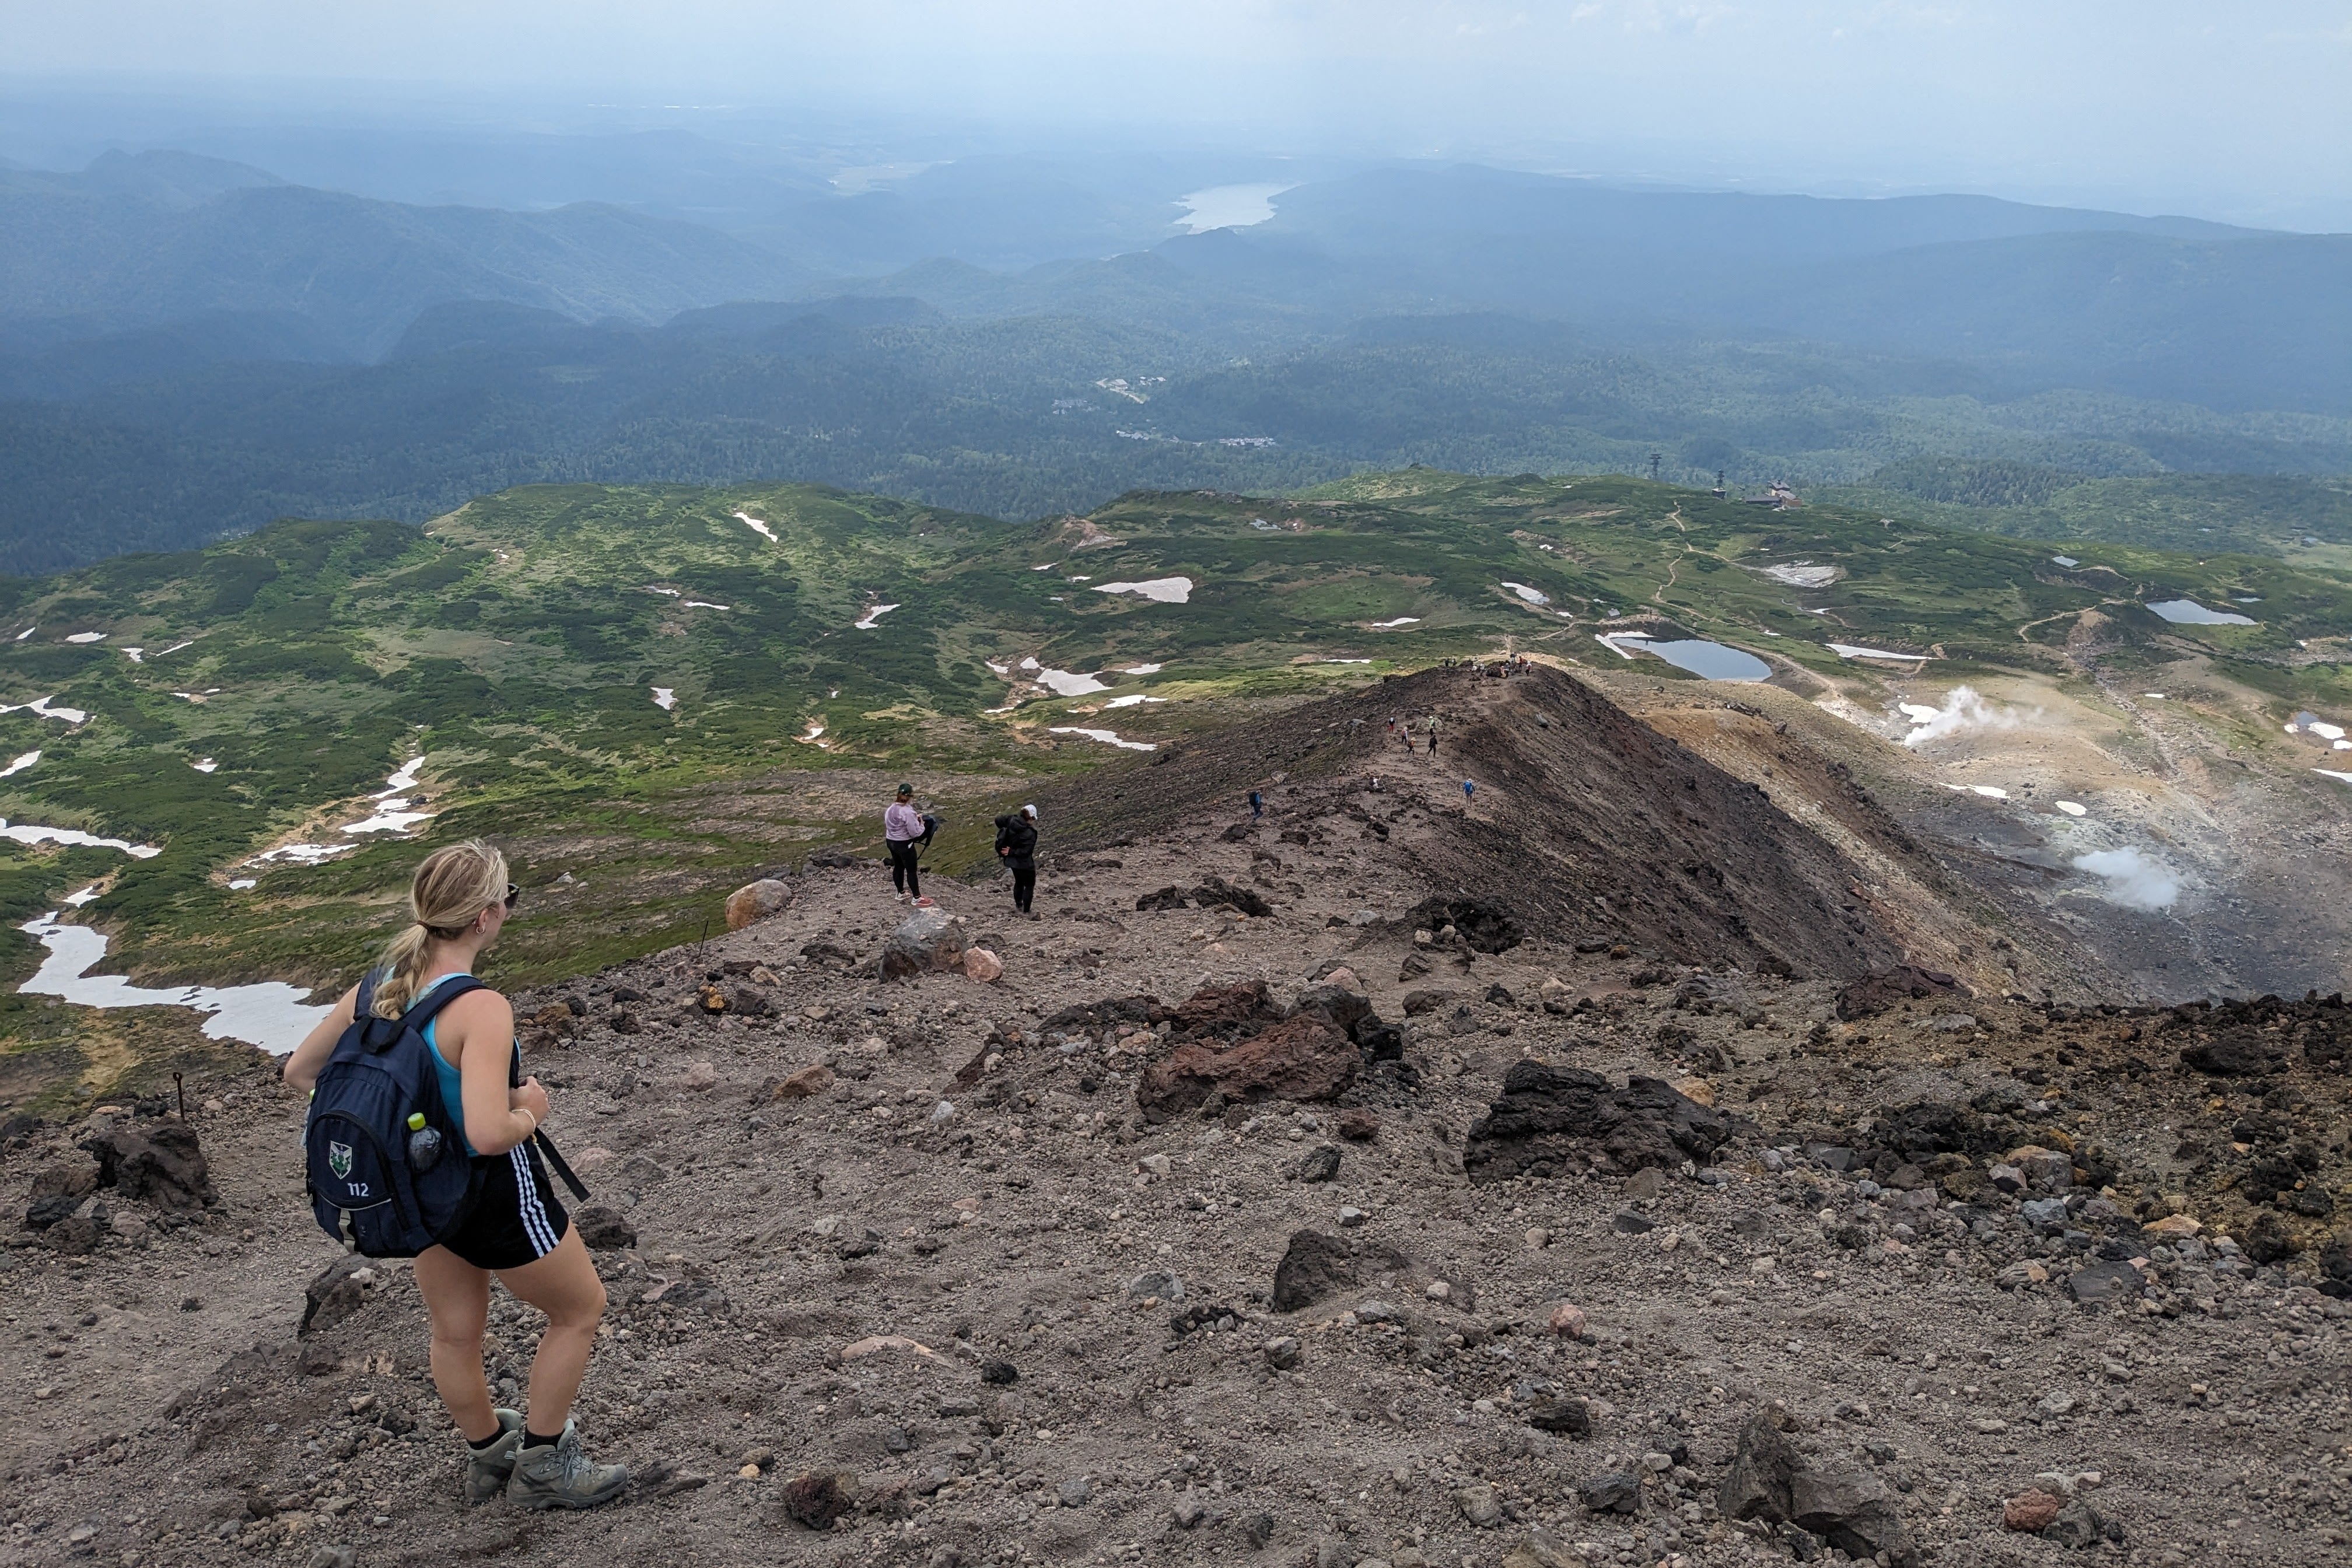 A family descends the rocky slopes of Mt. Asahidake.